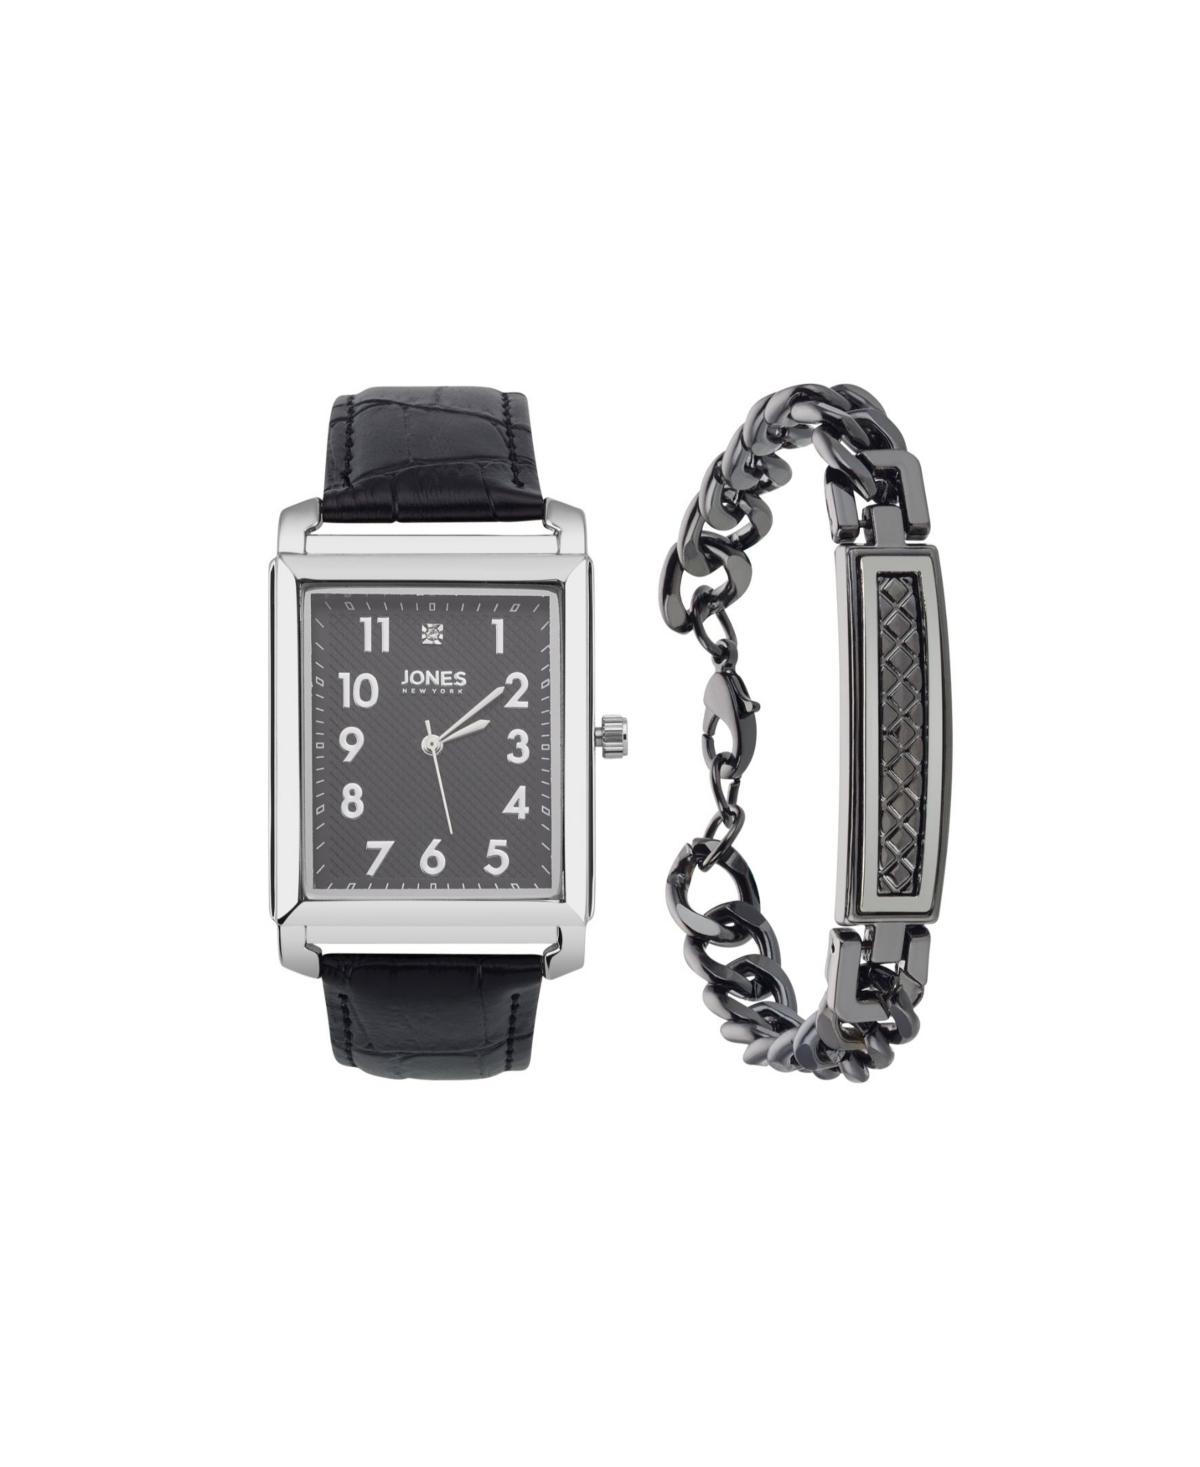 Men's Analog Black Polyurethane Strap Watch, 33mm and Bracelet Set - Black